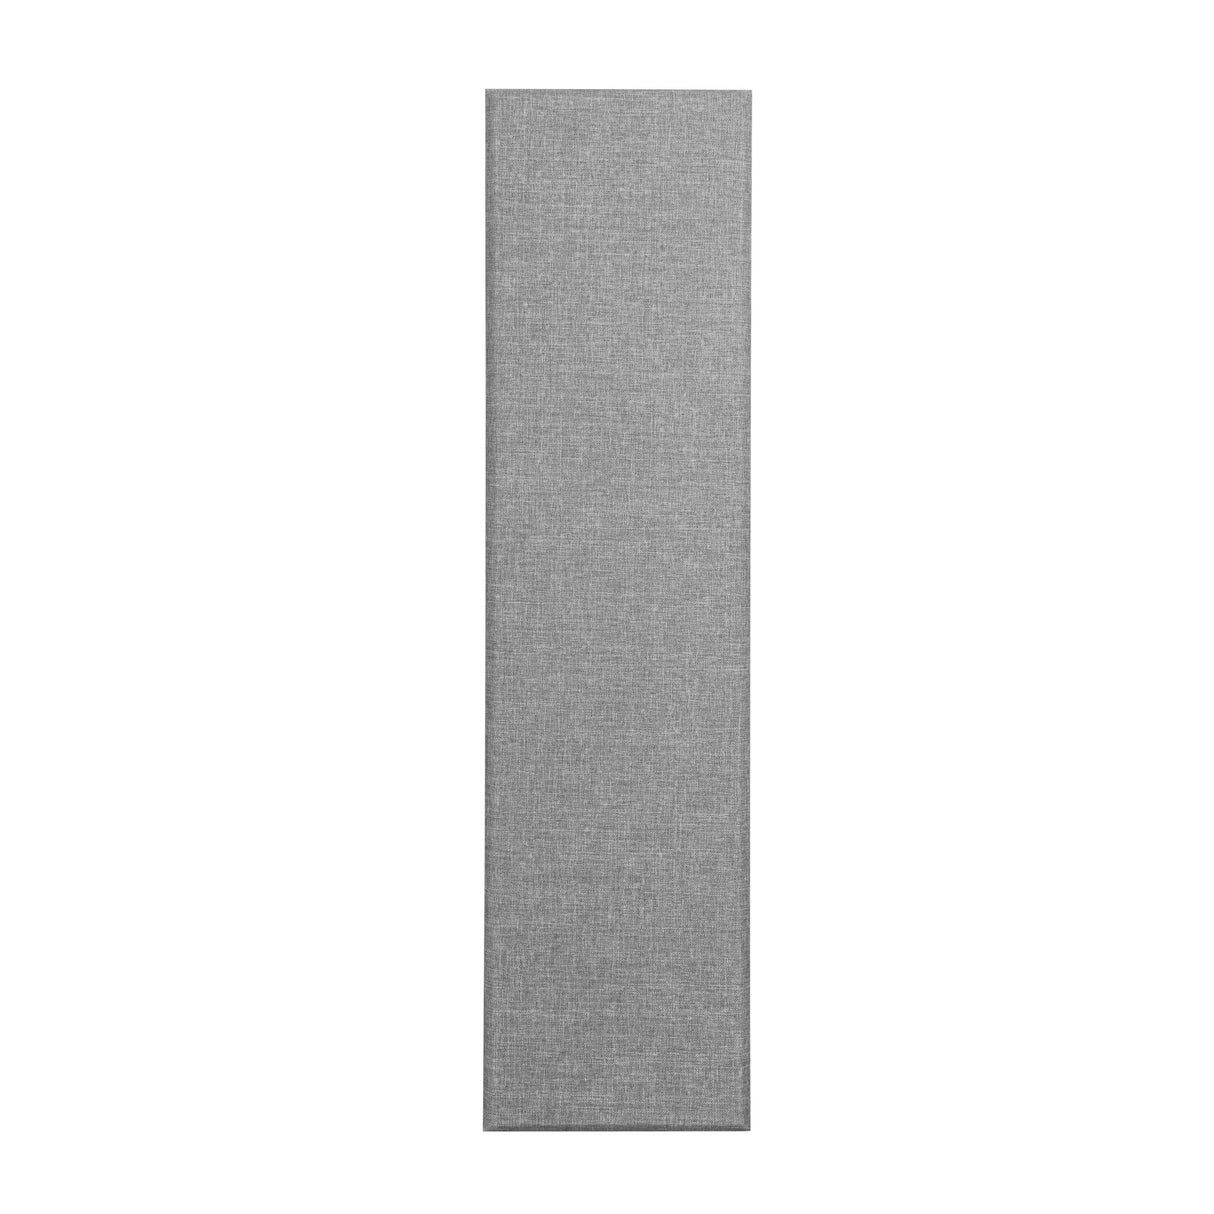 Primacoustic Control Column 12 x 48 x 1-Inch Acoustic Panels, Grey 12-Set, Beveled Edge